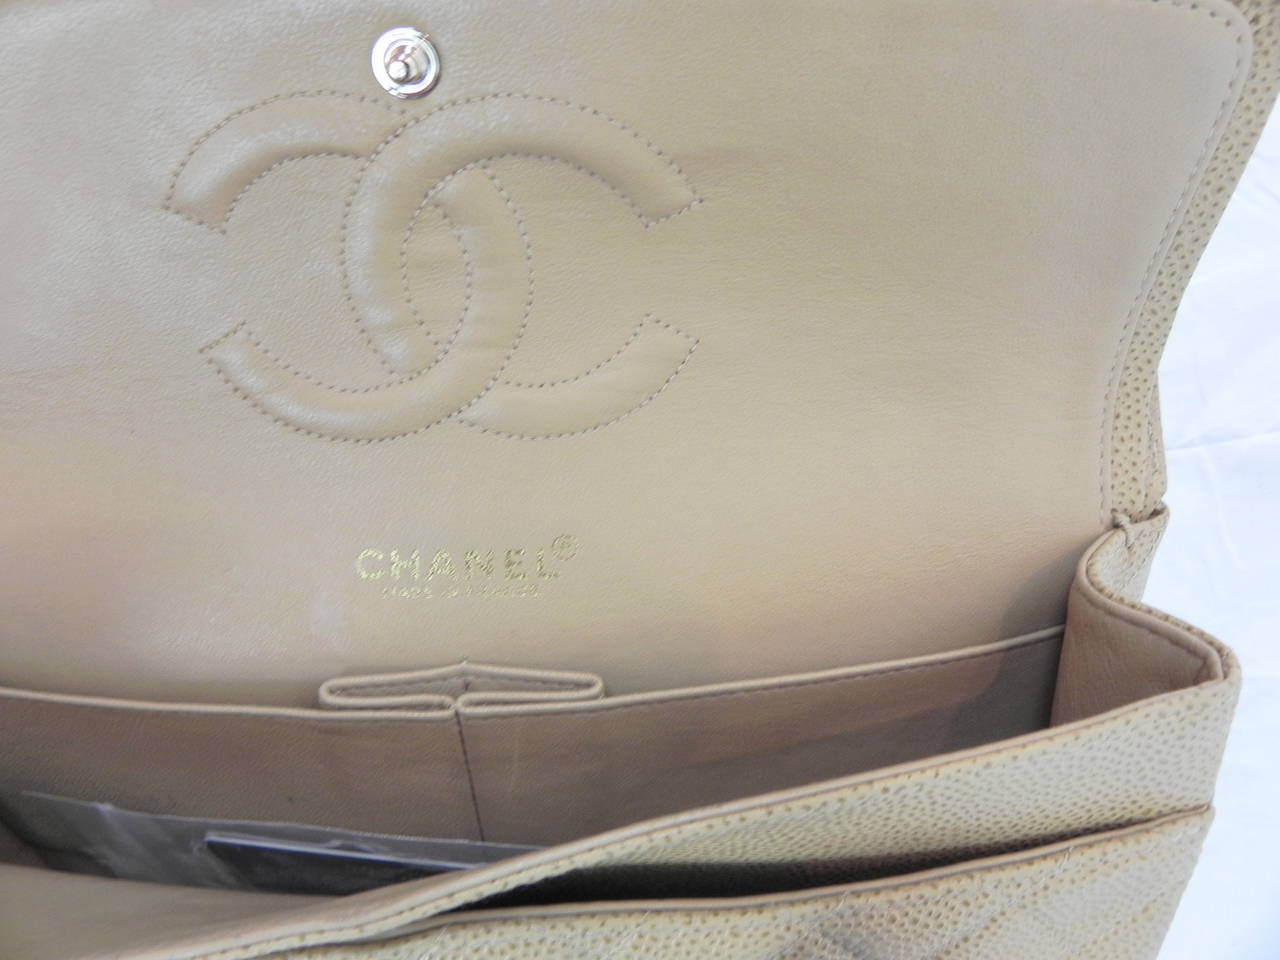 Chanel 25.5 Classic Caviar Beige Bag with Original Guarantee card & Box 2